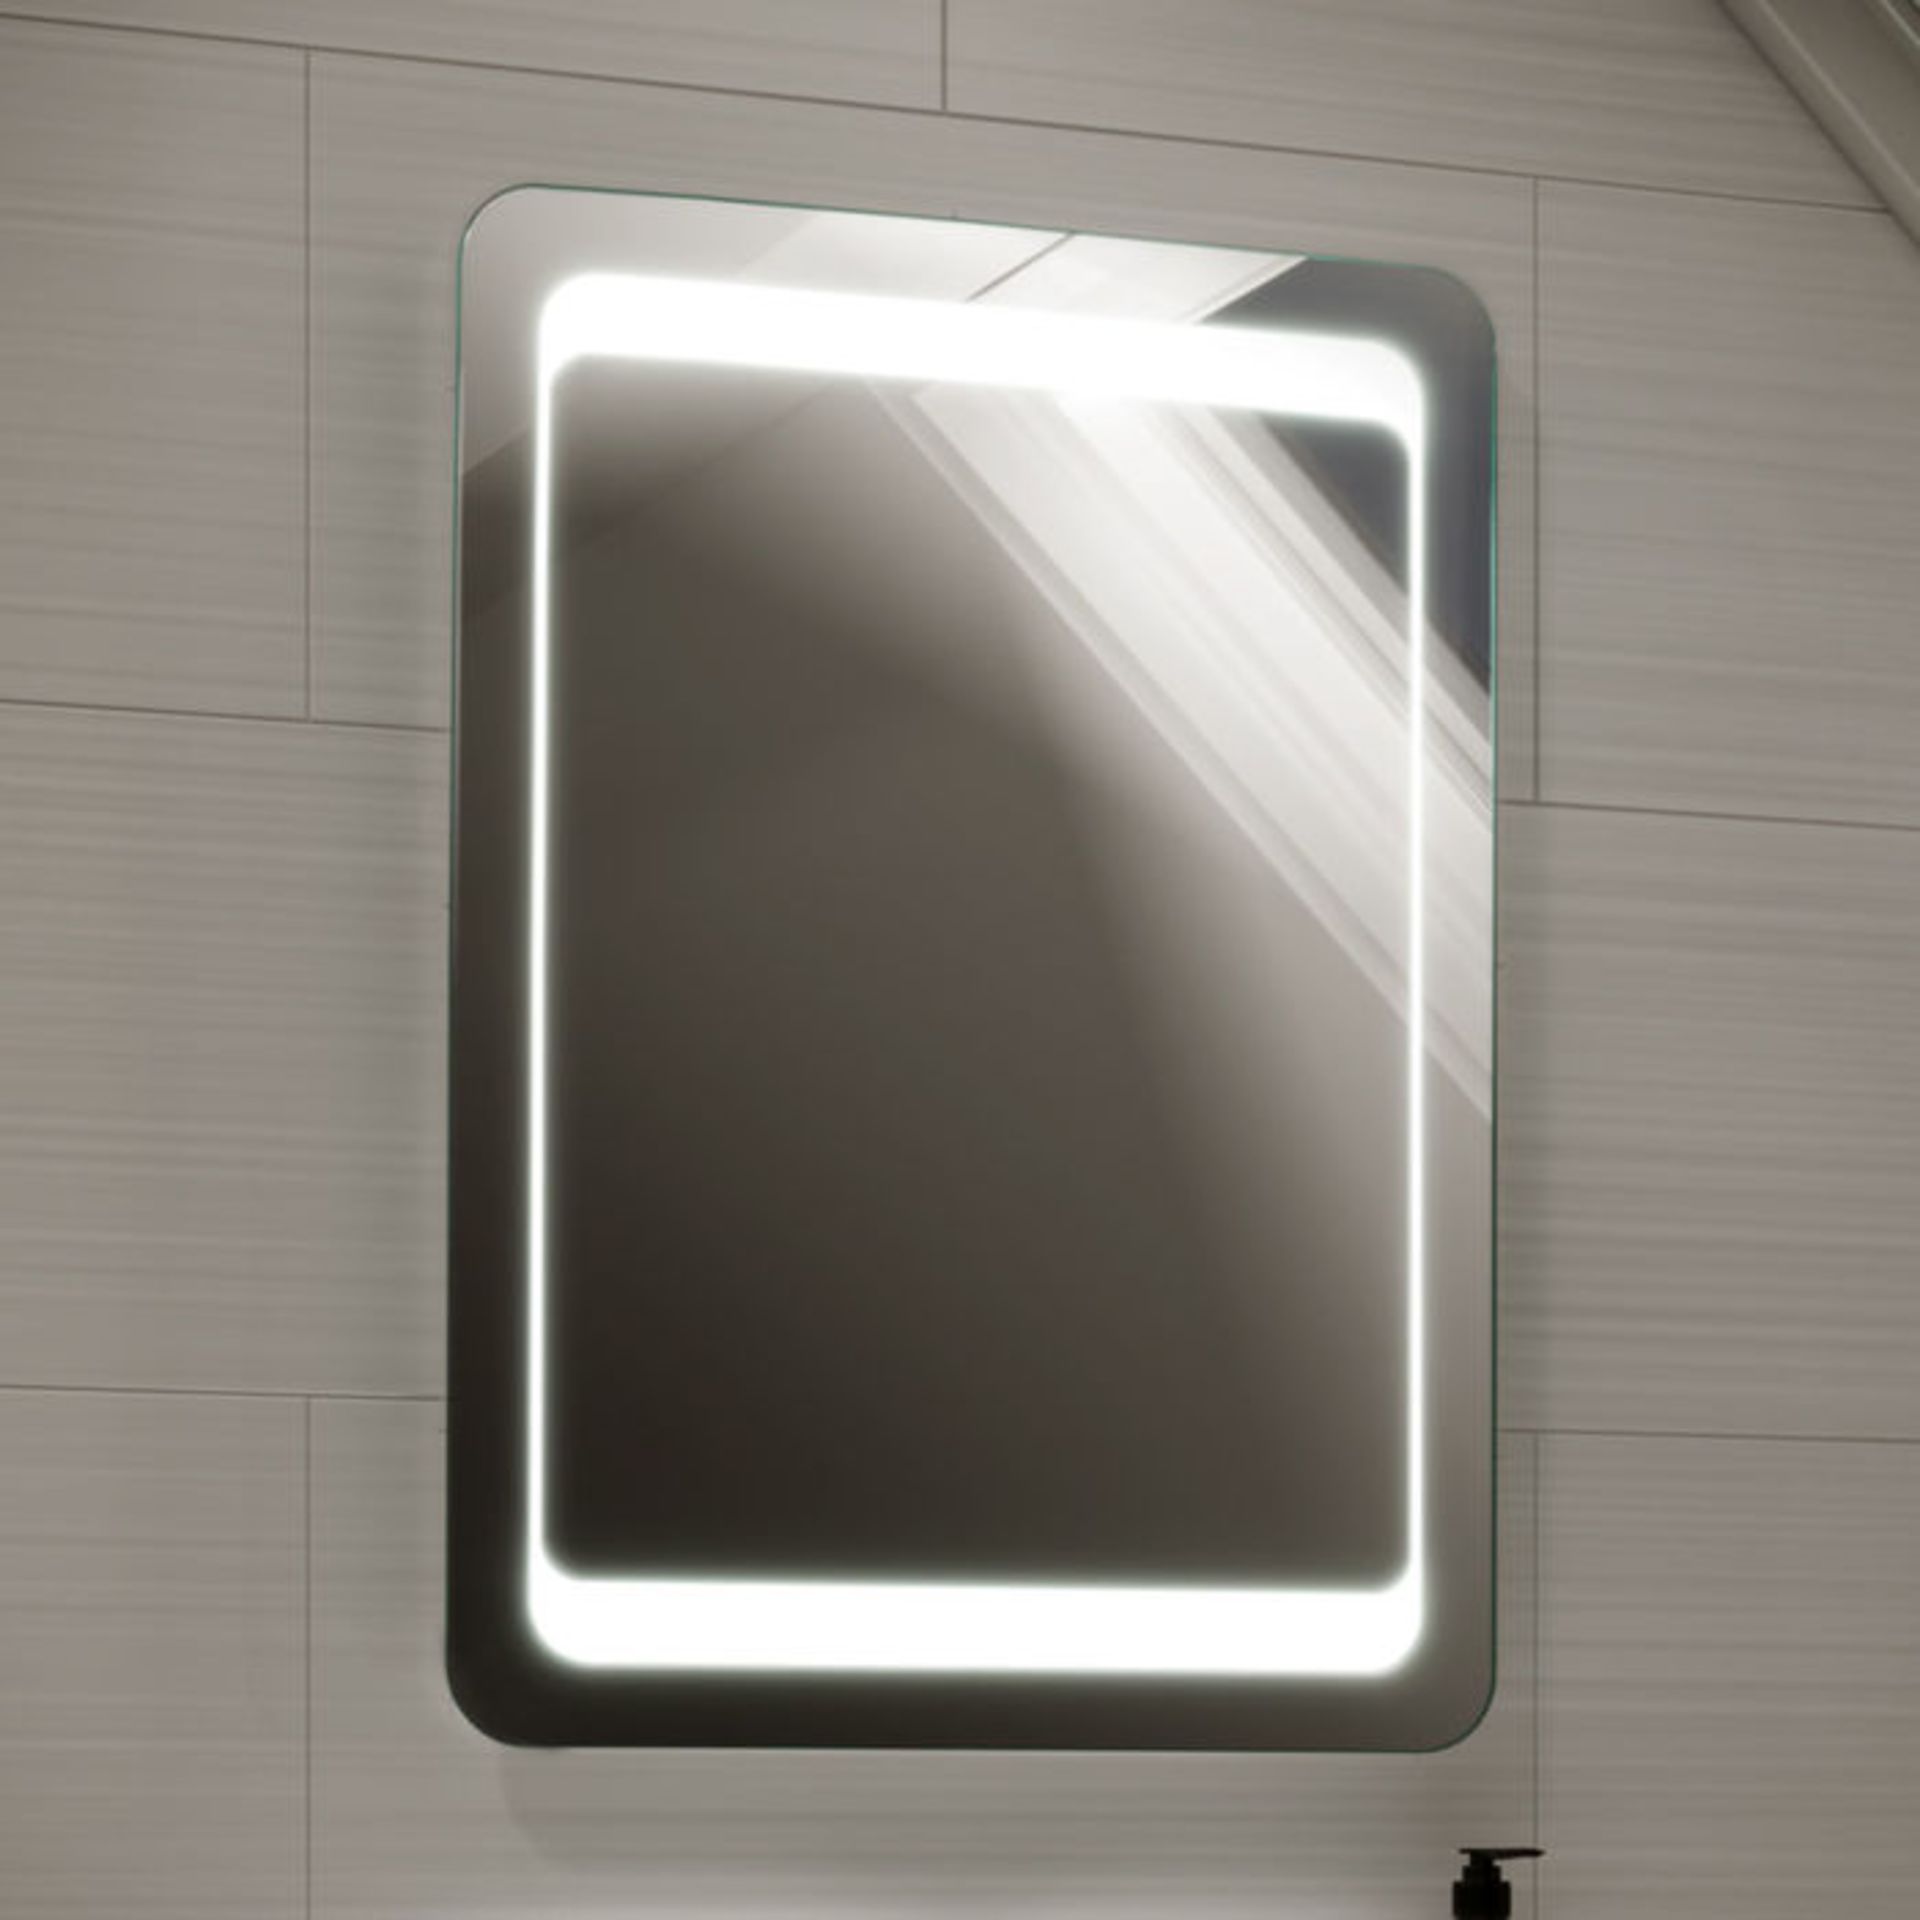 (XS100) 500x700mm Quasar Illuminated LED Mirror. RRP £349.99. Energy efficient LED lighting with - Image 2 of 6